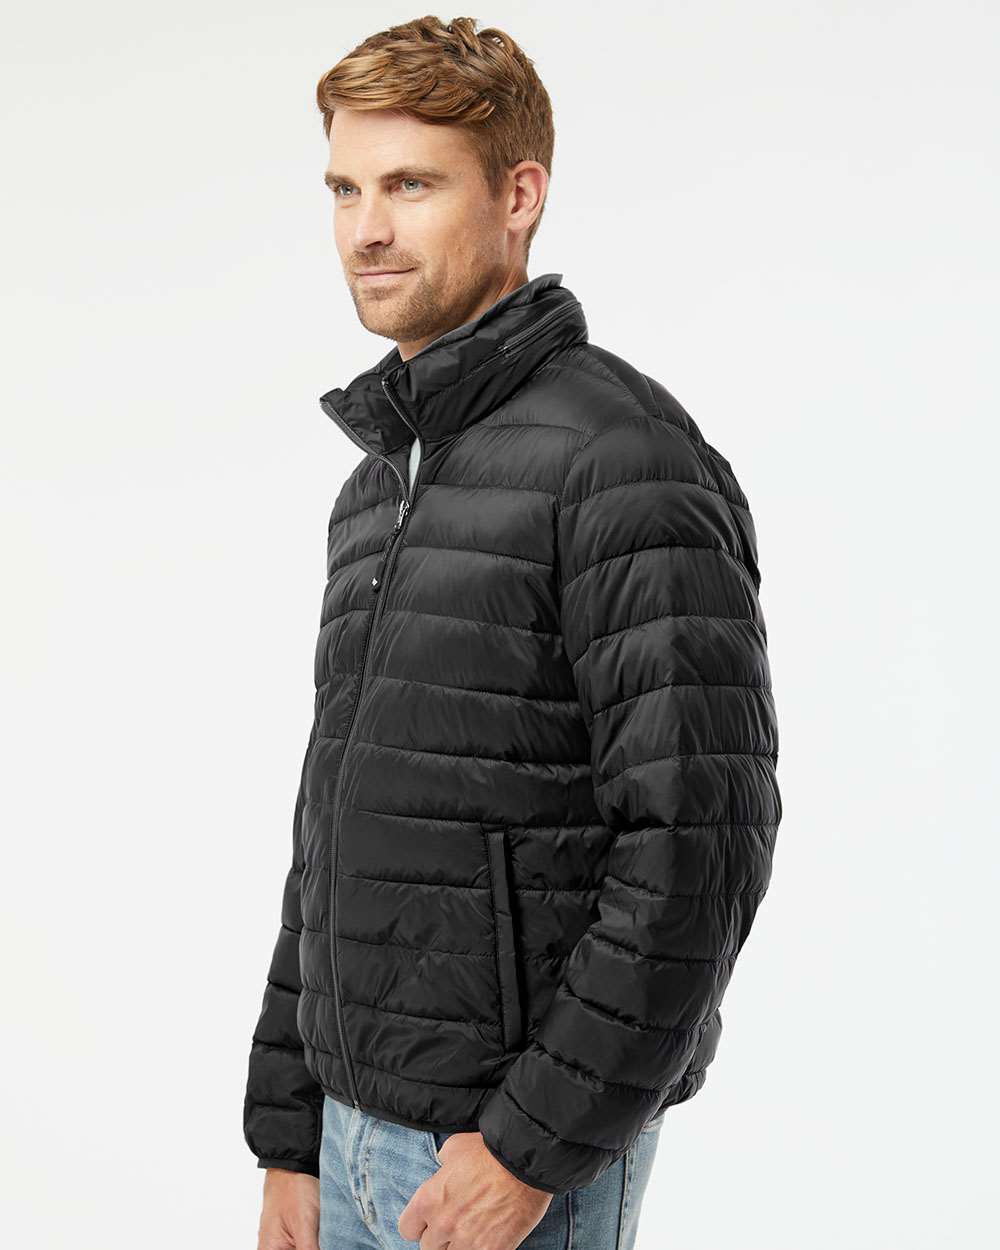 Weatherproof - PillowPac Puffer Jacket - 211136 - Pewter - Size: L